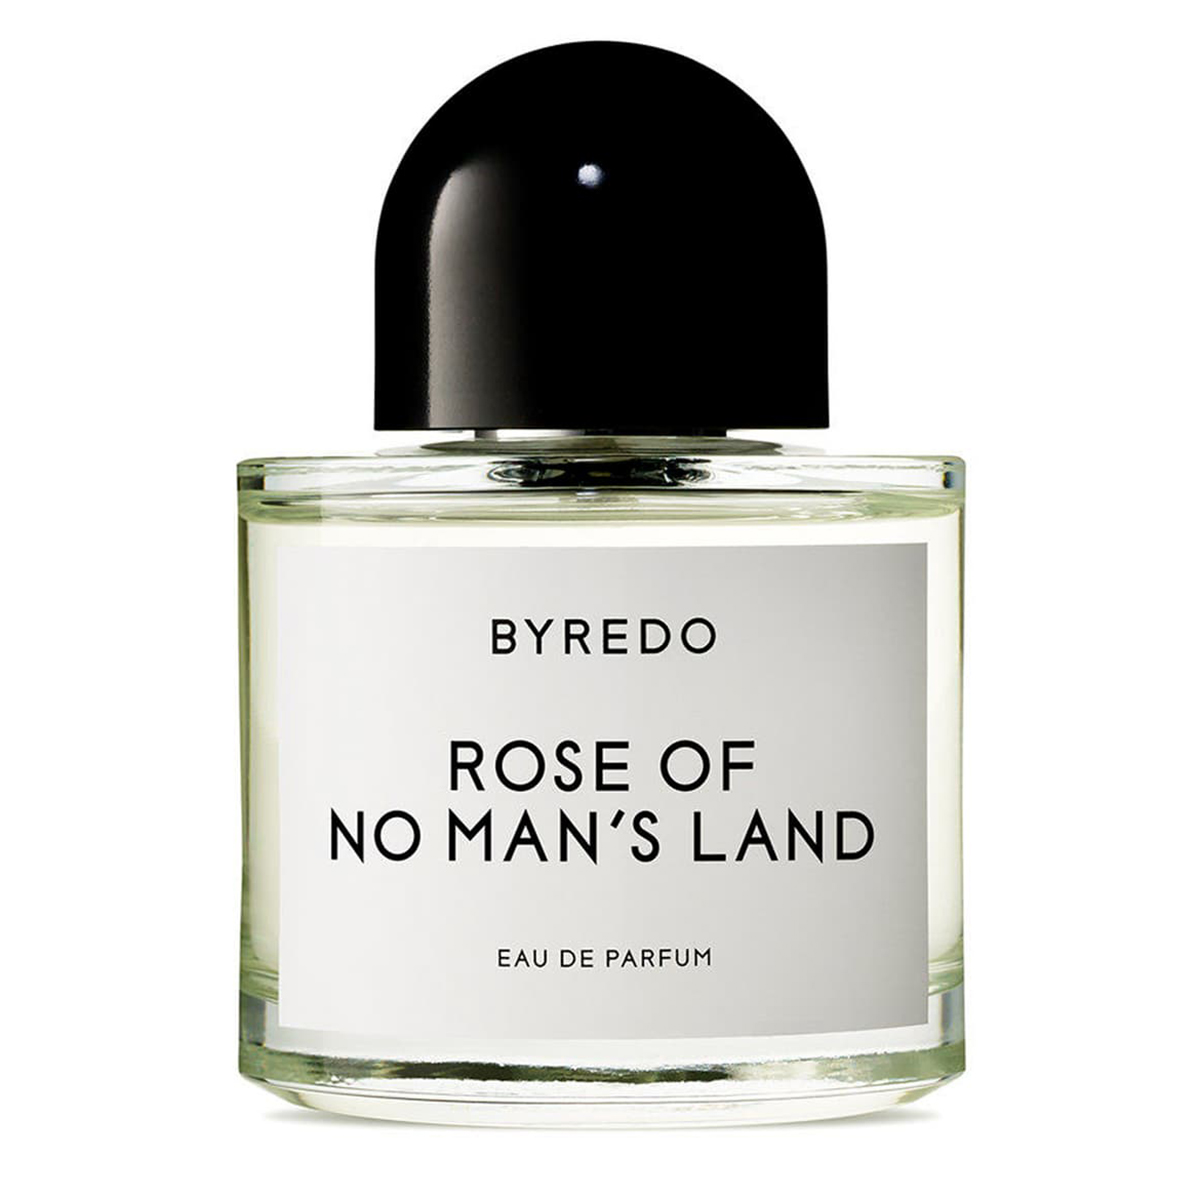 Byredo Rose of No Man's Land Eau de Parfum, 50ml